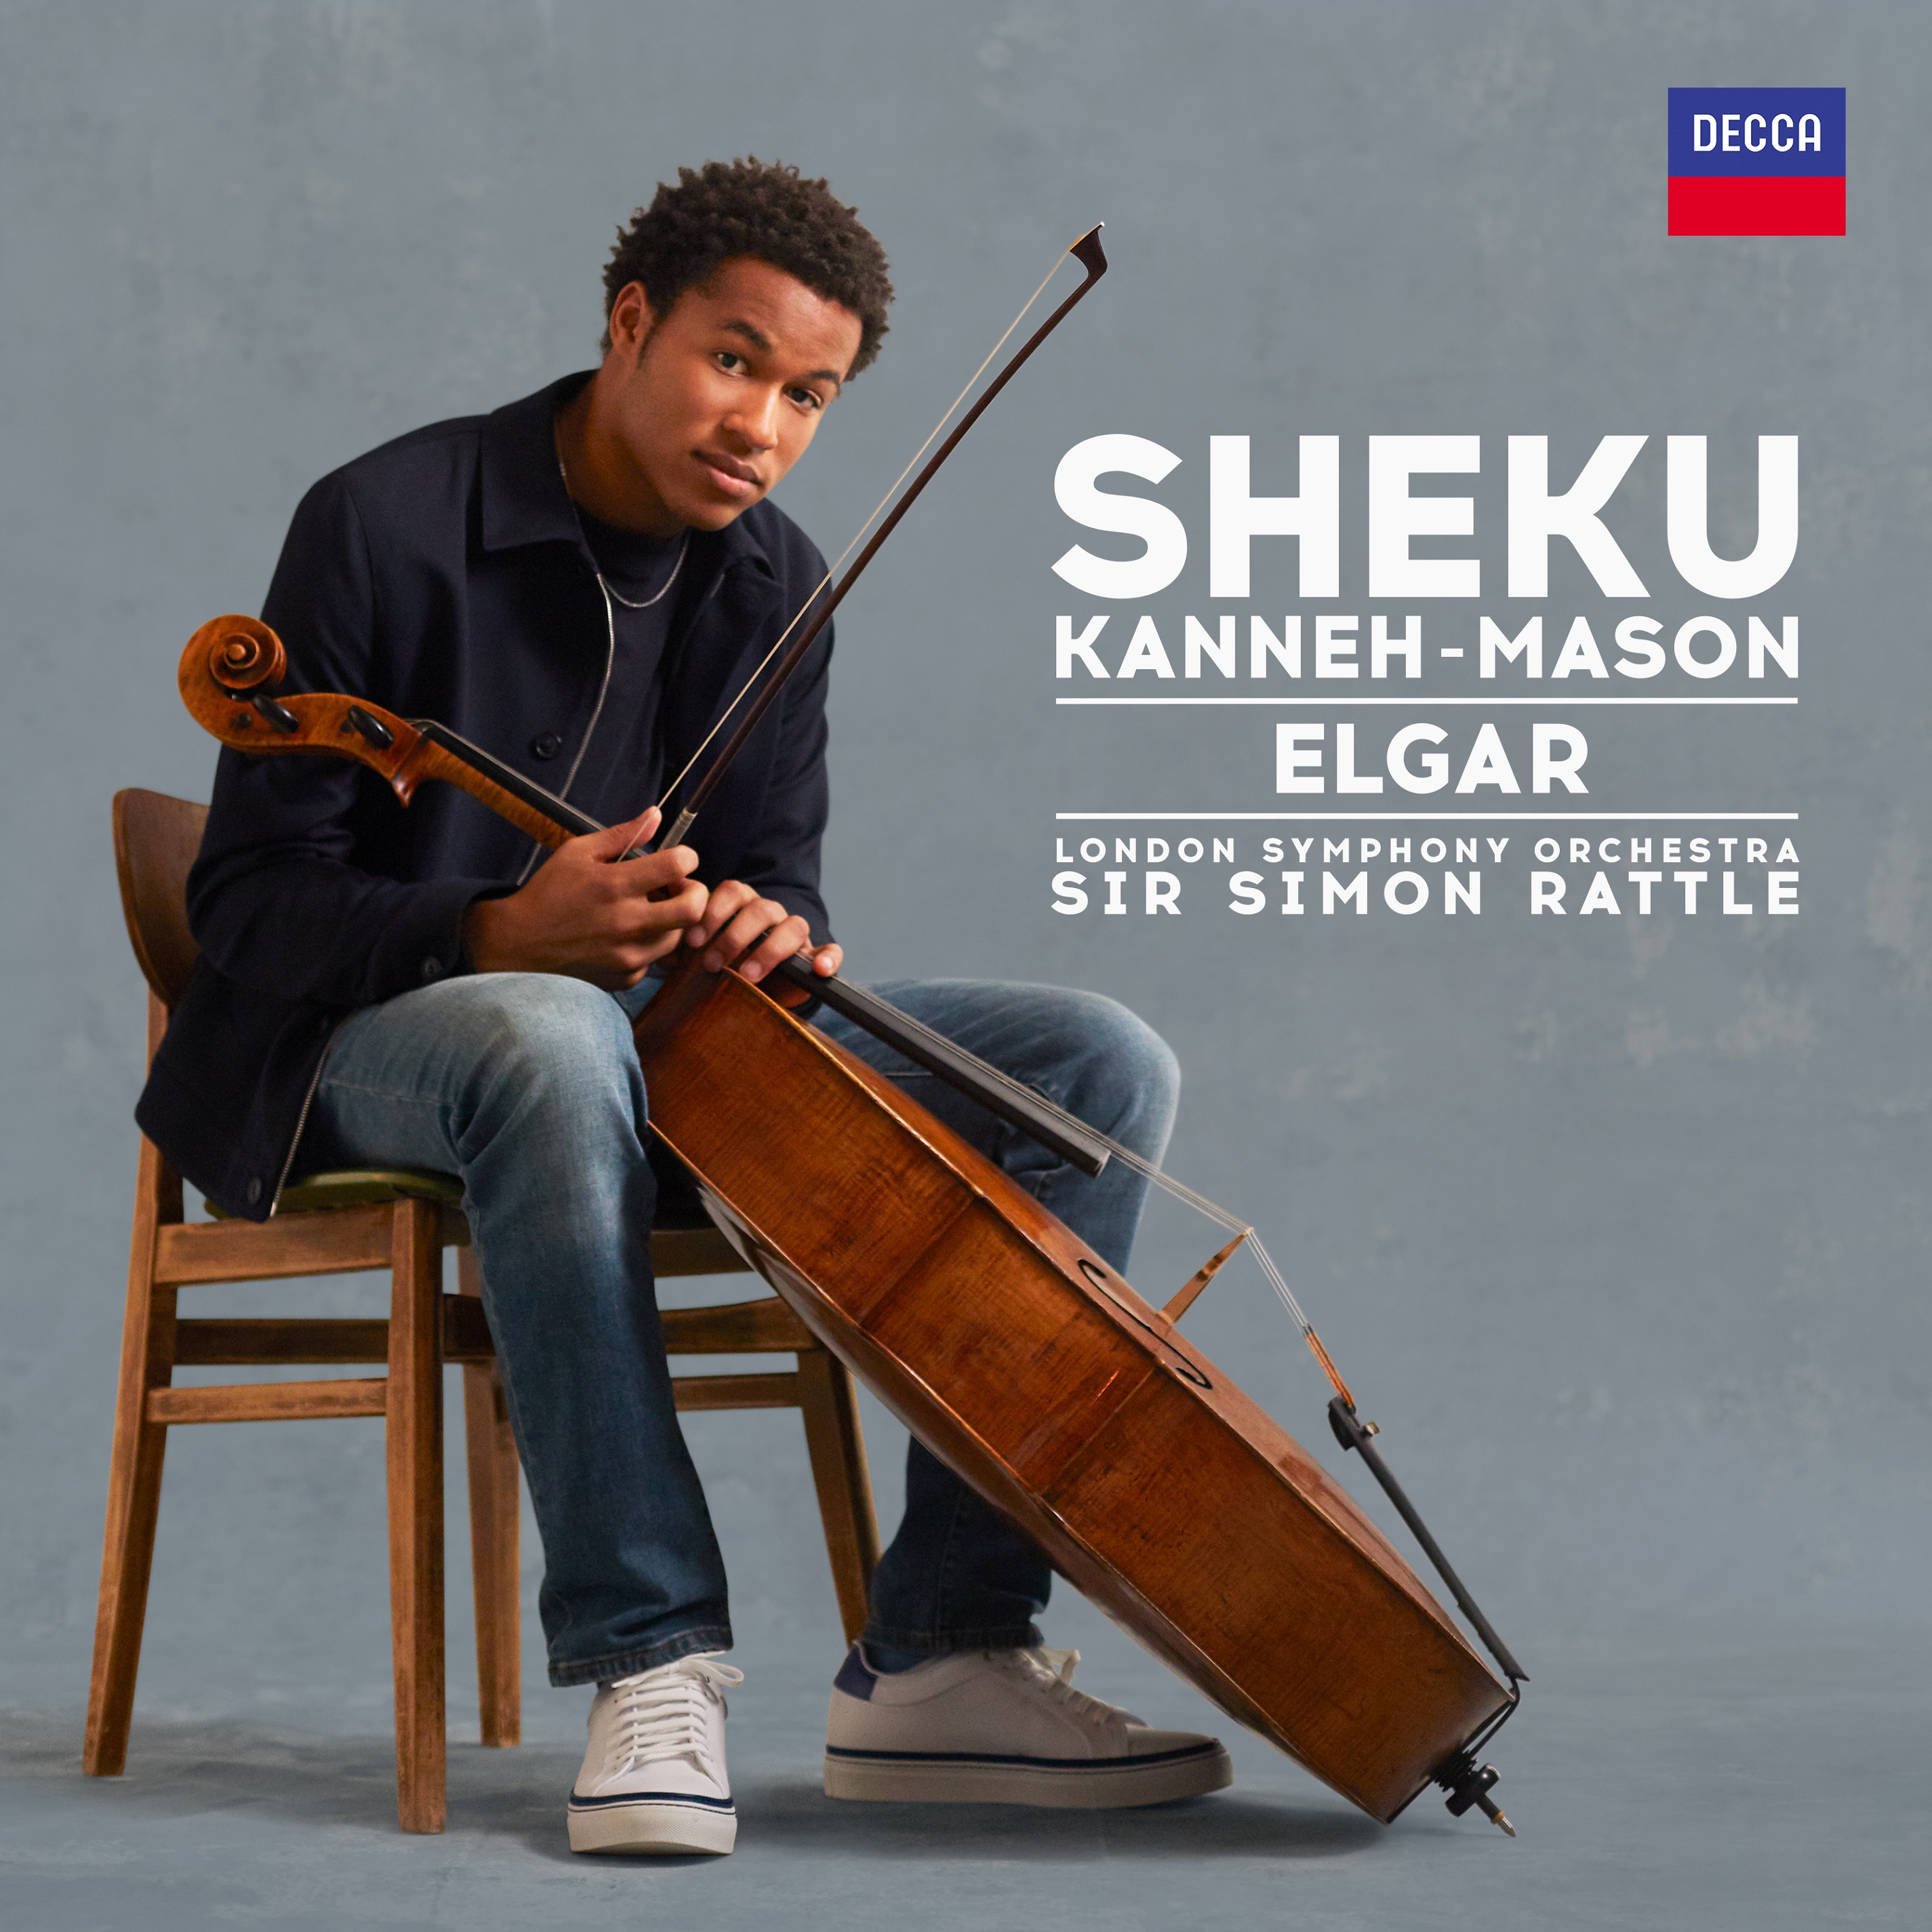 Sheku Kanneh-Mason's album